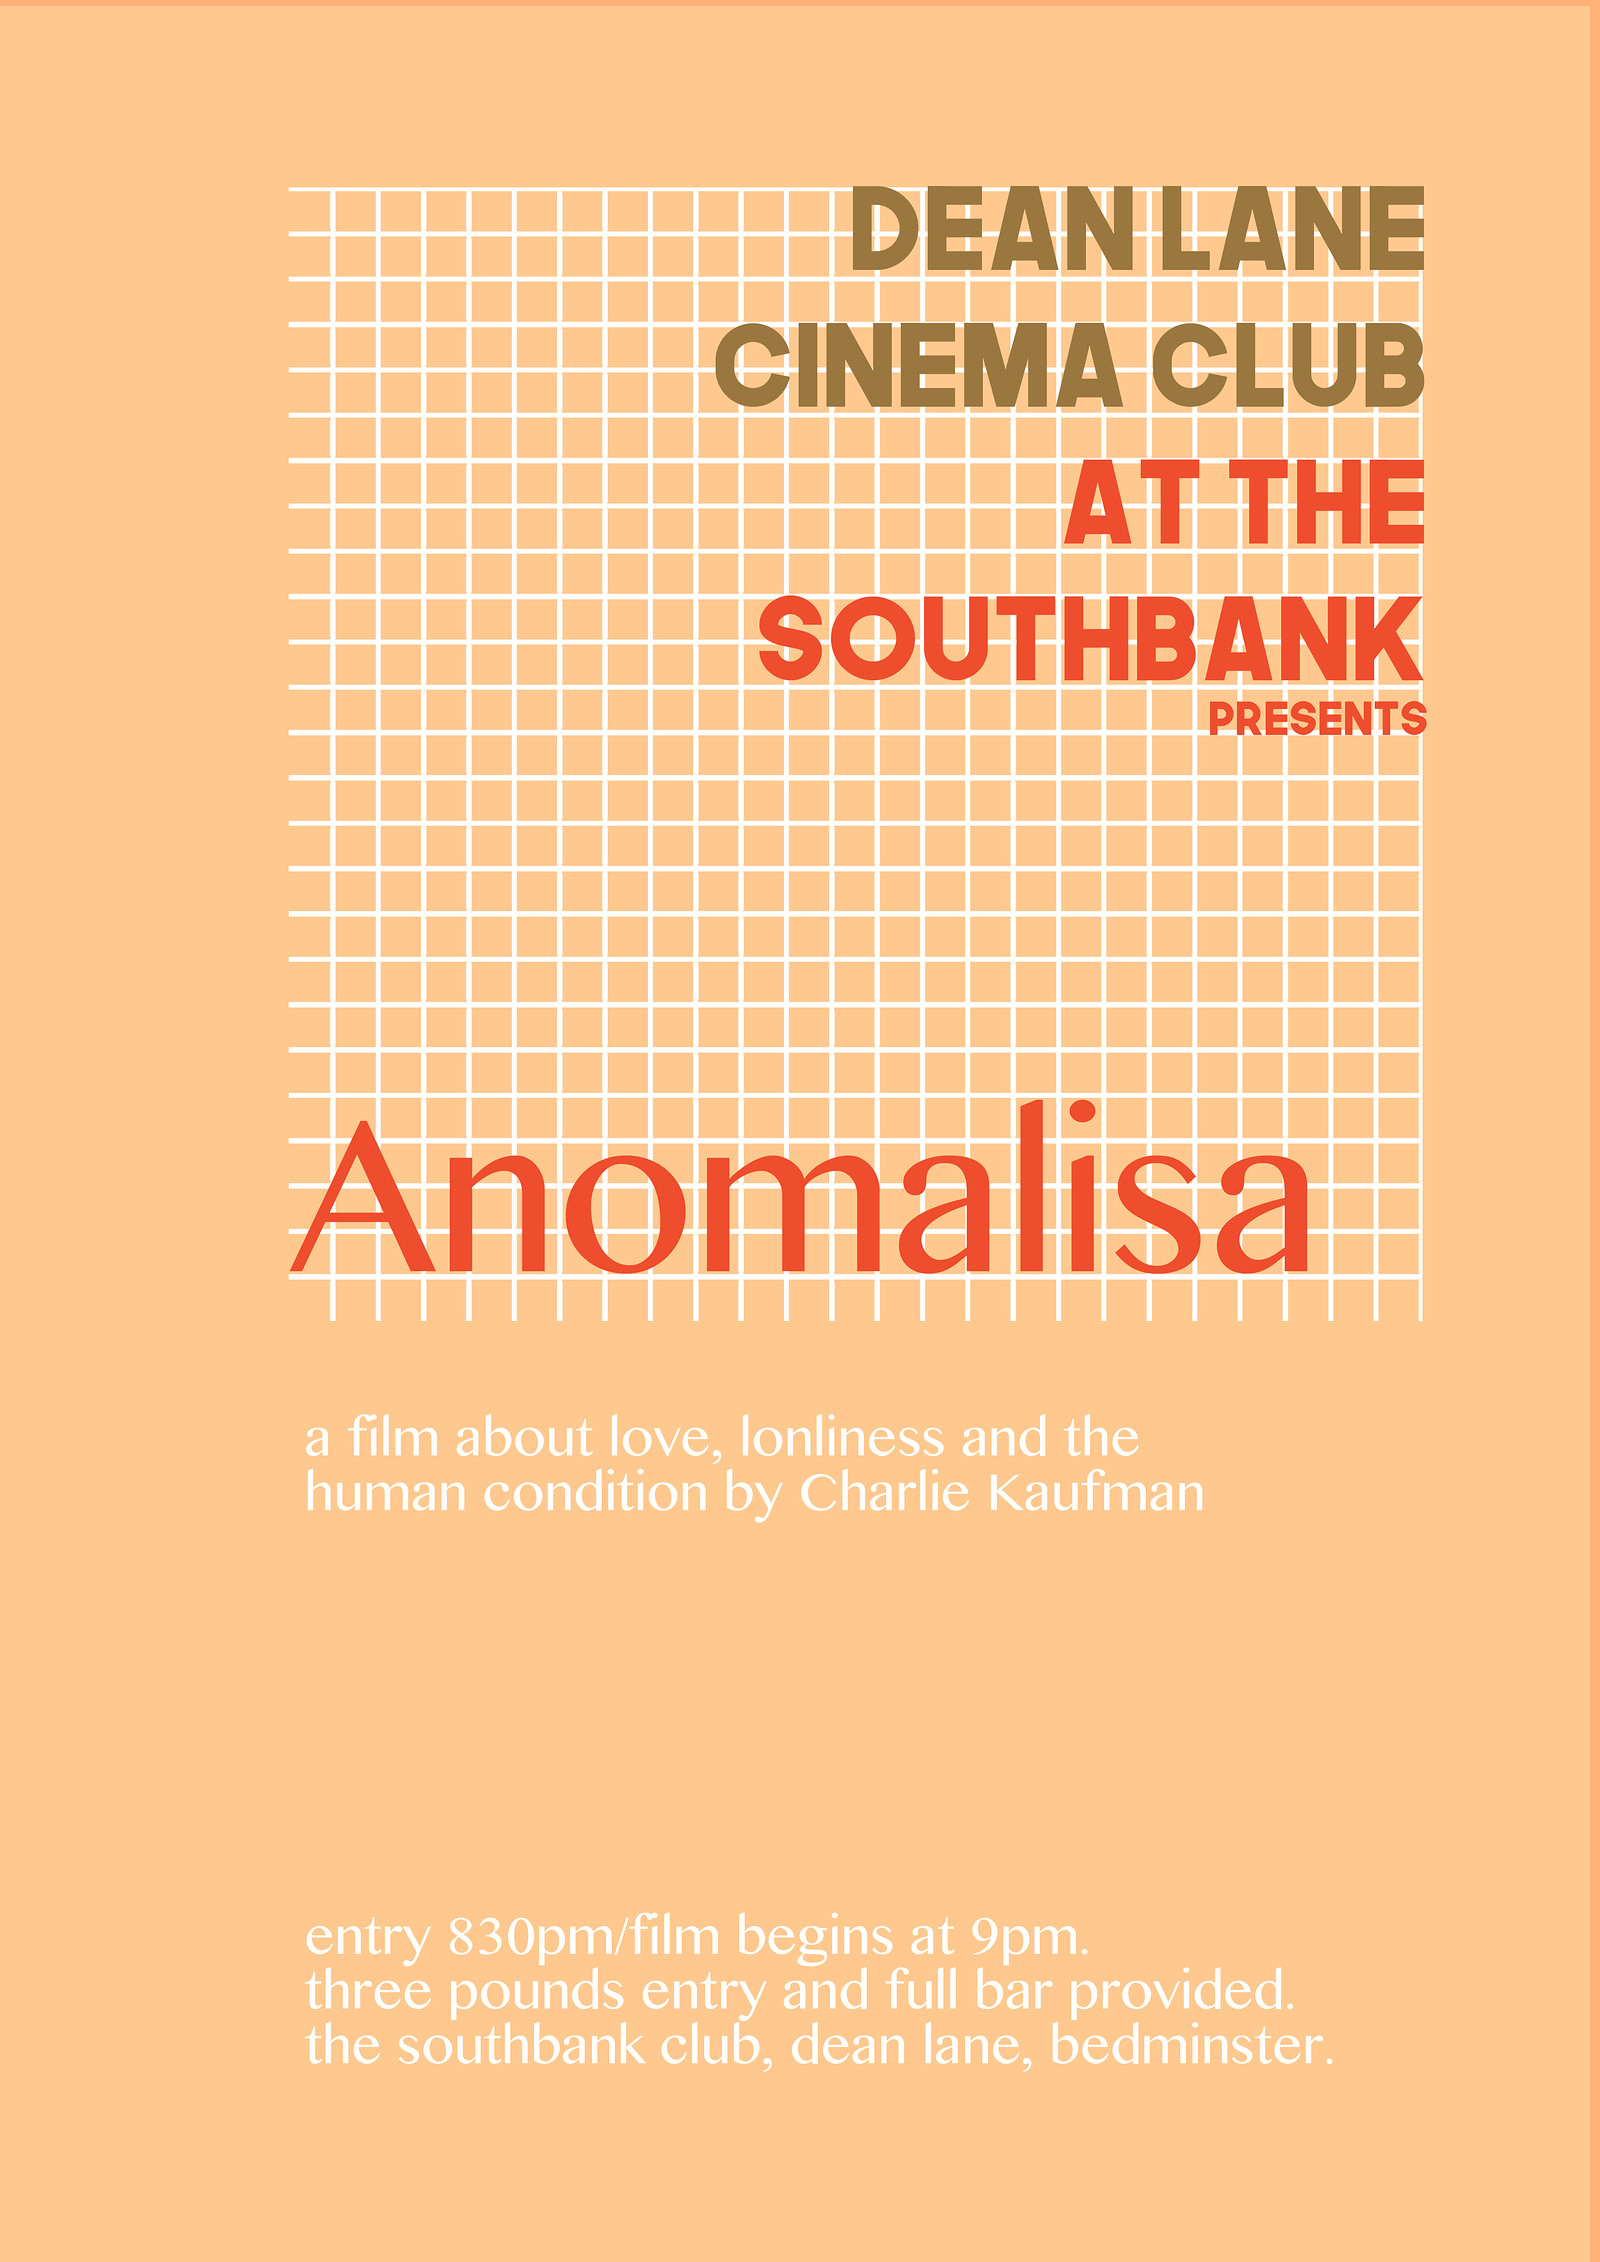 Dean Lane Cinema Club Presents: Anomalisa at Southbank